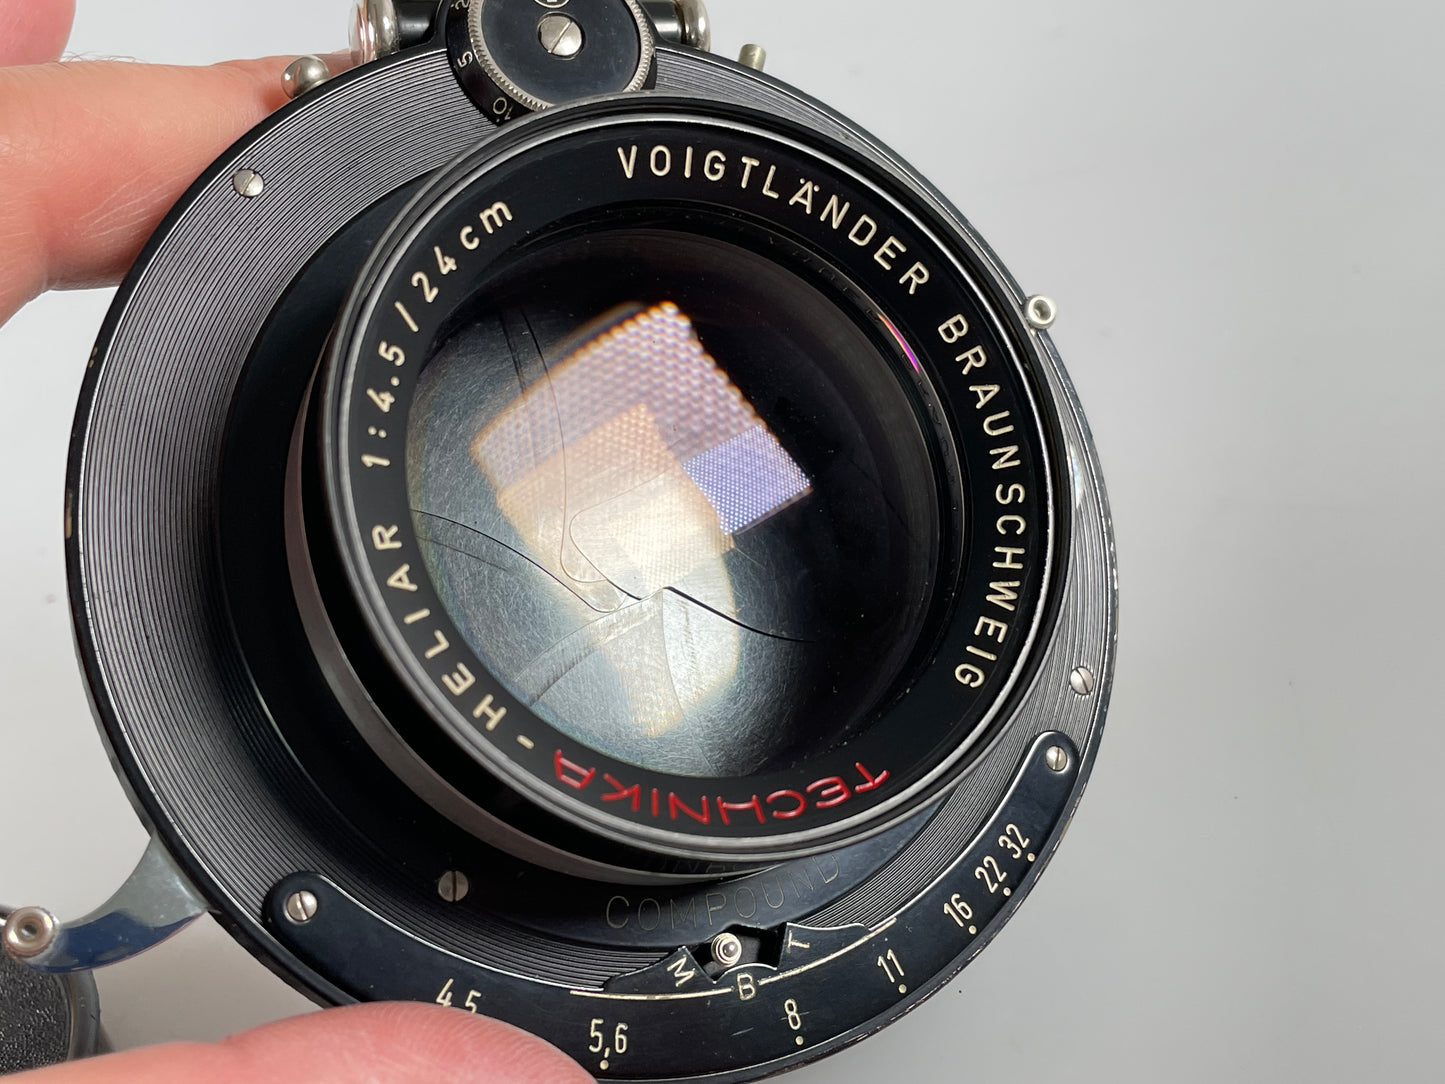 Voigtlander Heliar 24cm 240mm f4.5 Technika large format lens with compound shutter